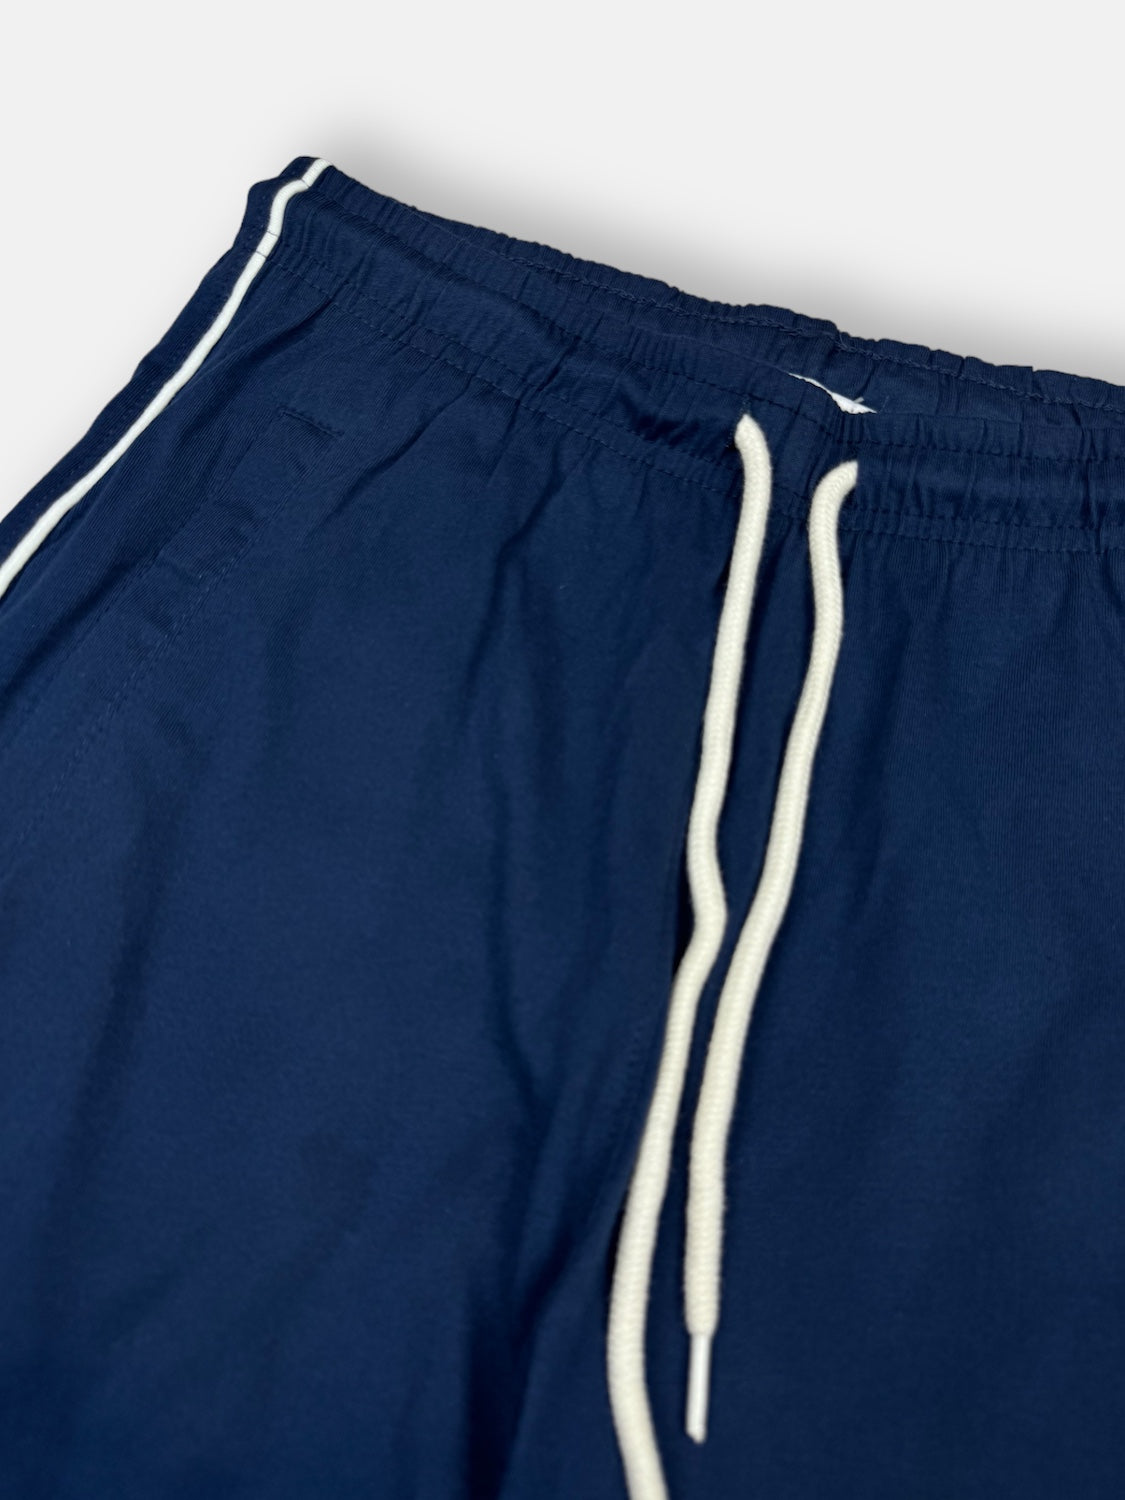 BRSHKA Premium Cotton 3Quater Shorts (Navy Blue)